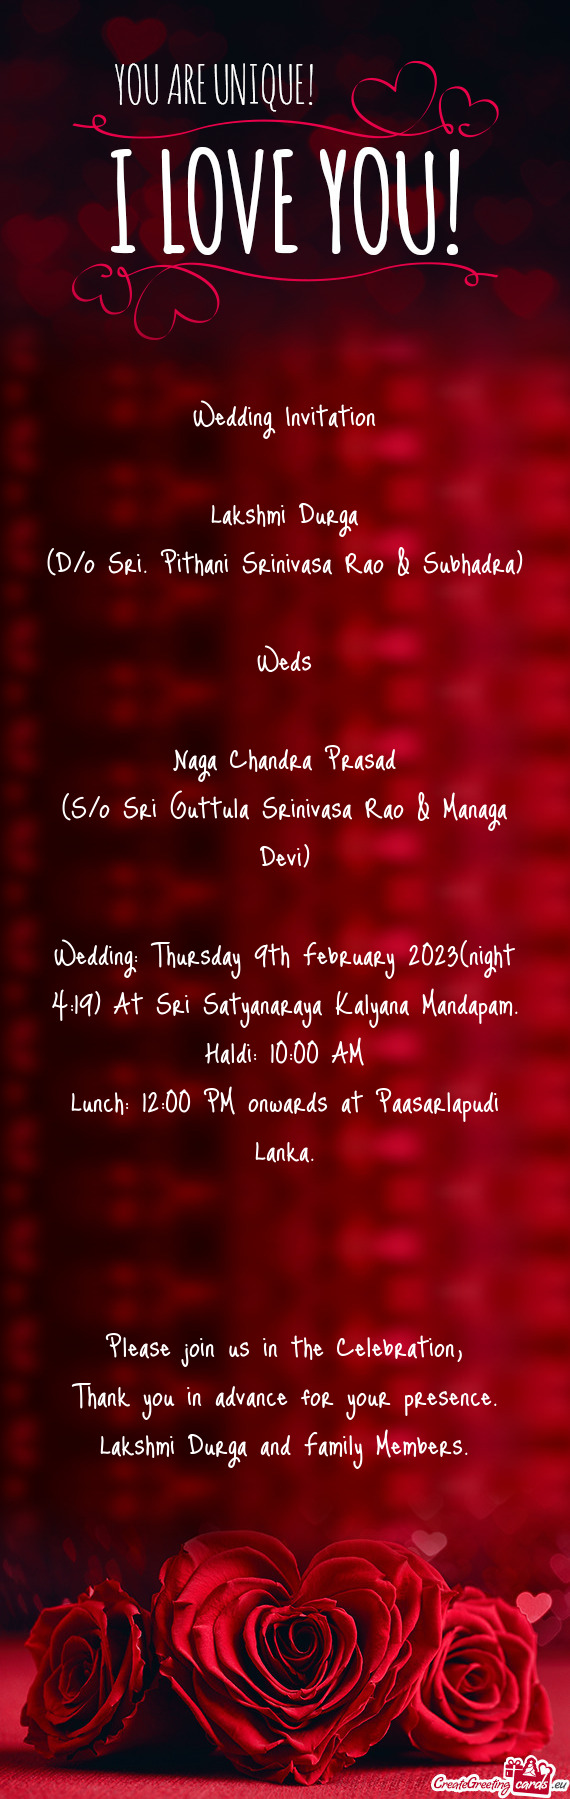 Wedding: Thursday 9th February 2023(night 4:19) At Sri Satyanaraya Kalyana Mandapam